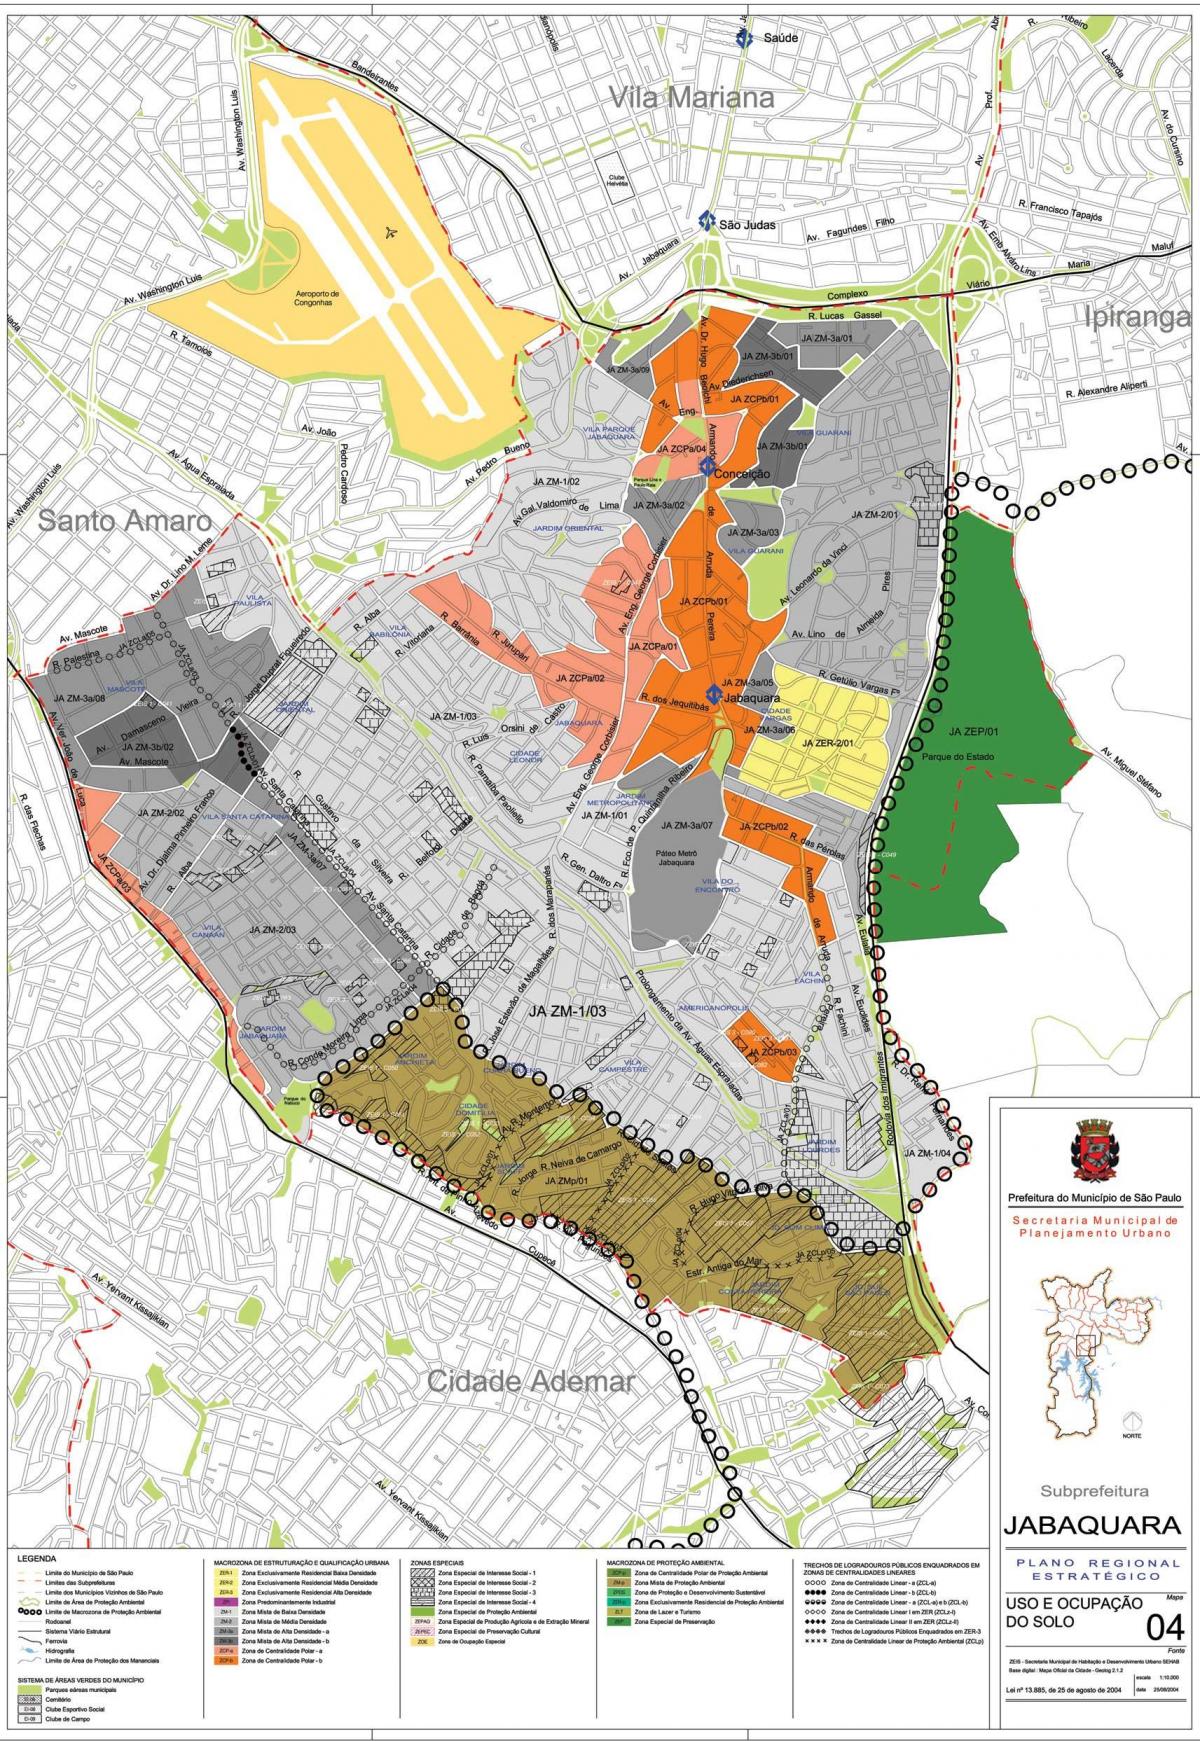 Mapa Jabaquara São Paulo - lurzoruaren Okupazioa